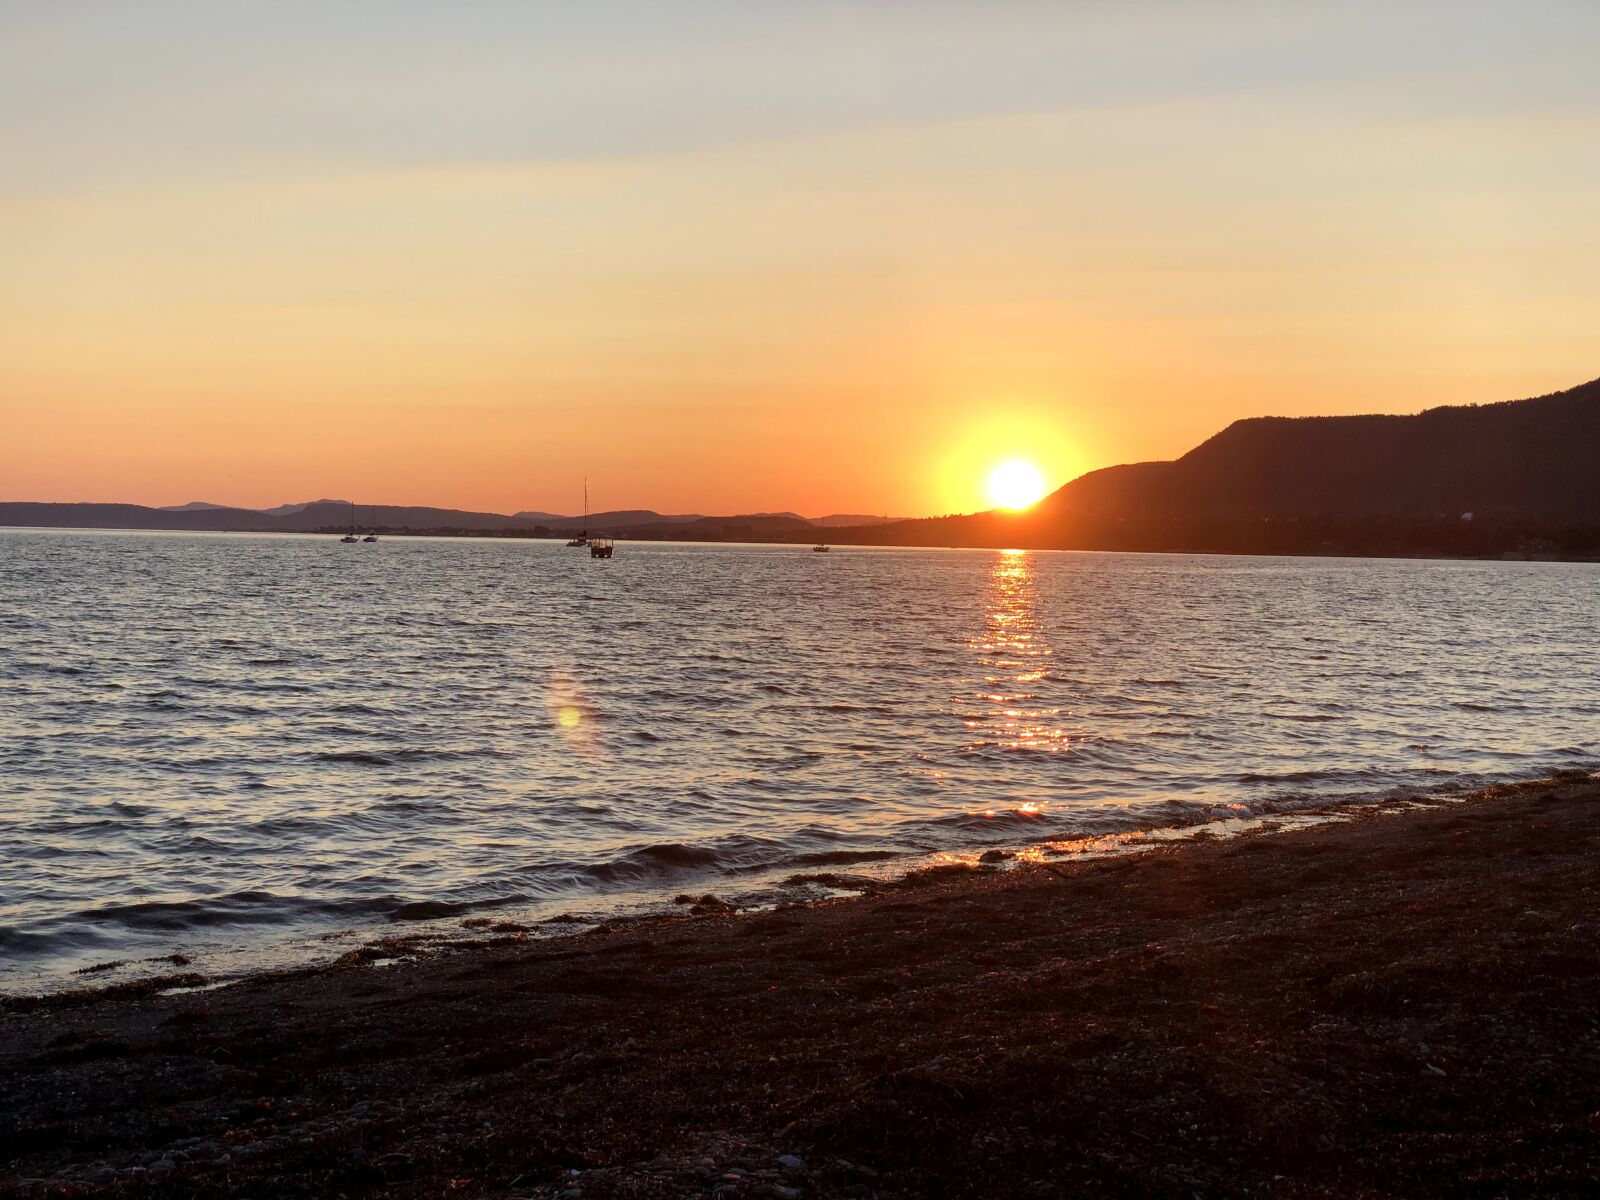 iPhone X back dual camera 6mm f/2.4 sample photo. Sunset, beach, sea photography